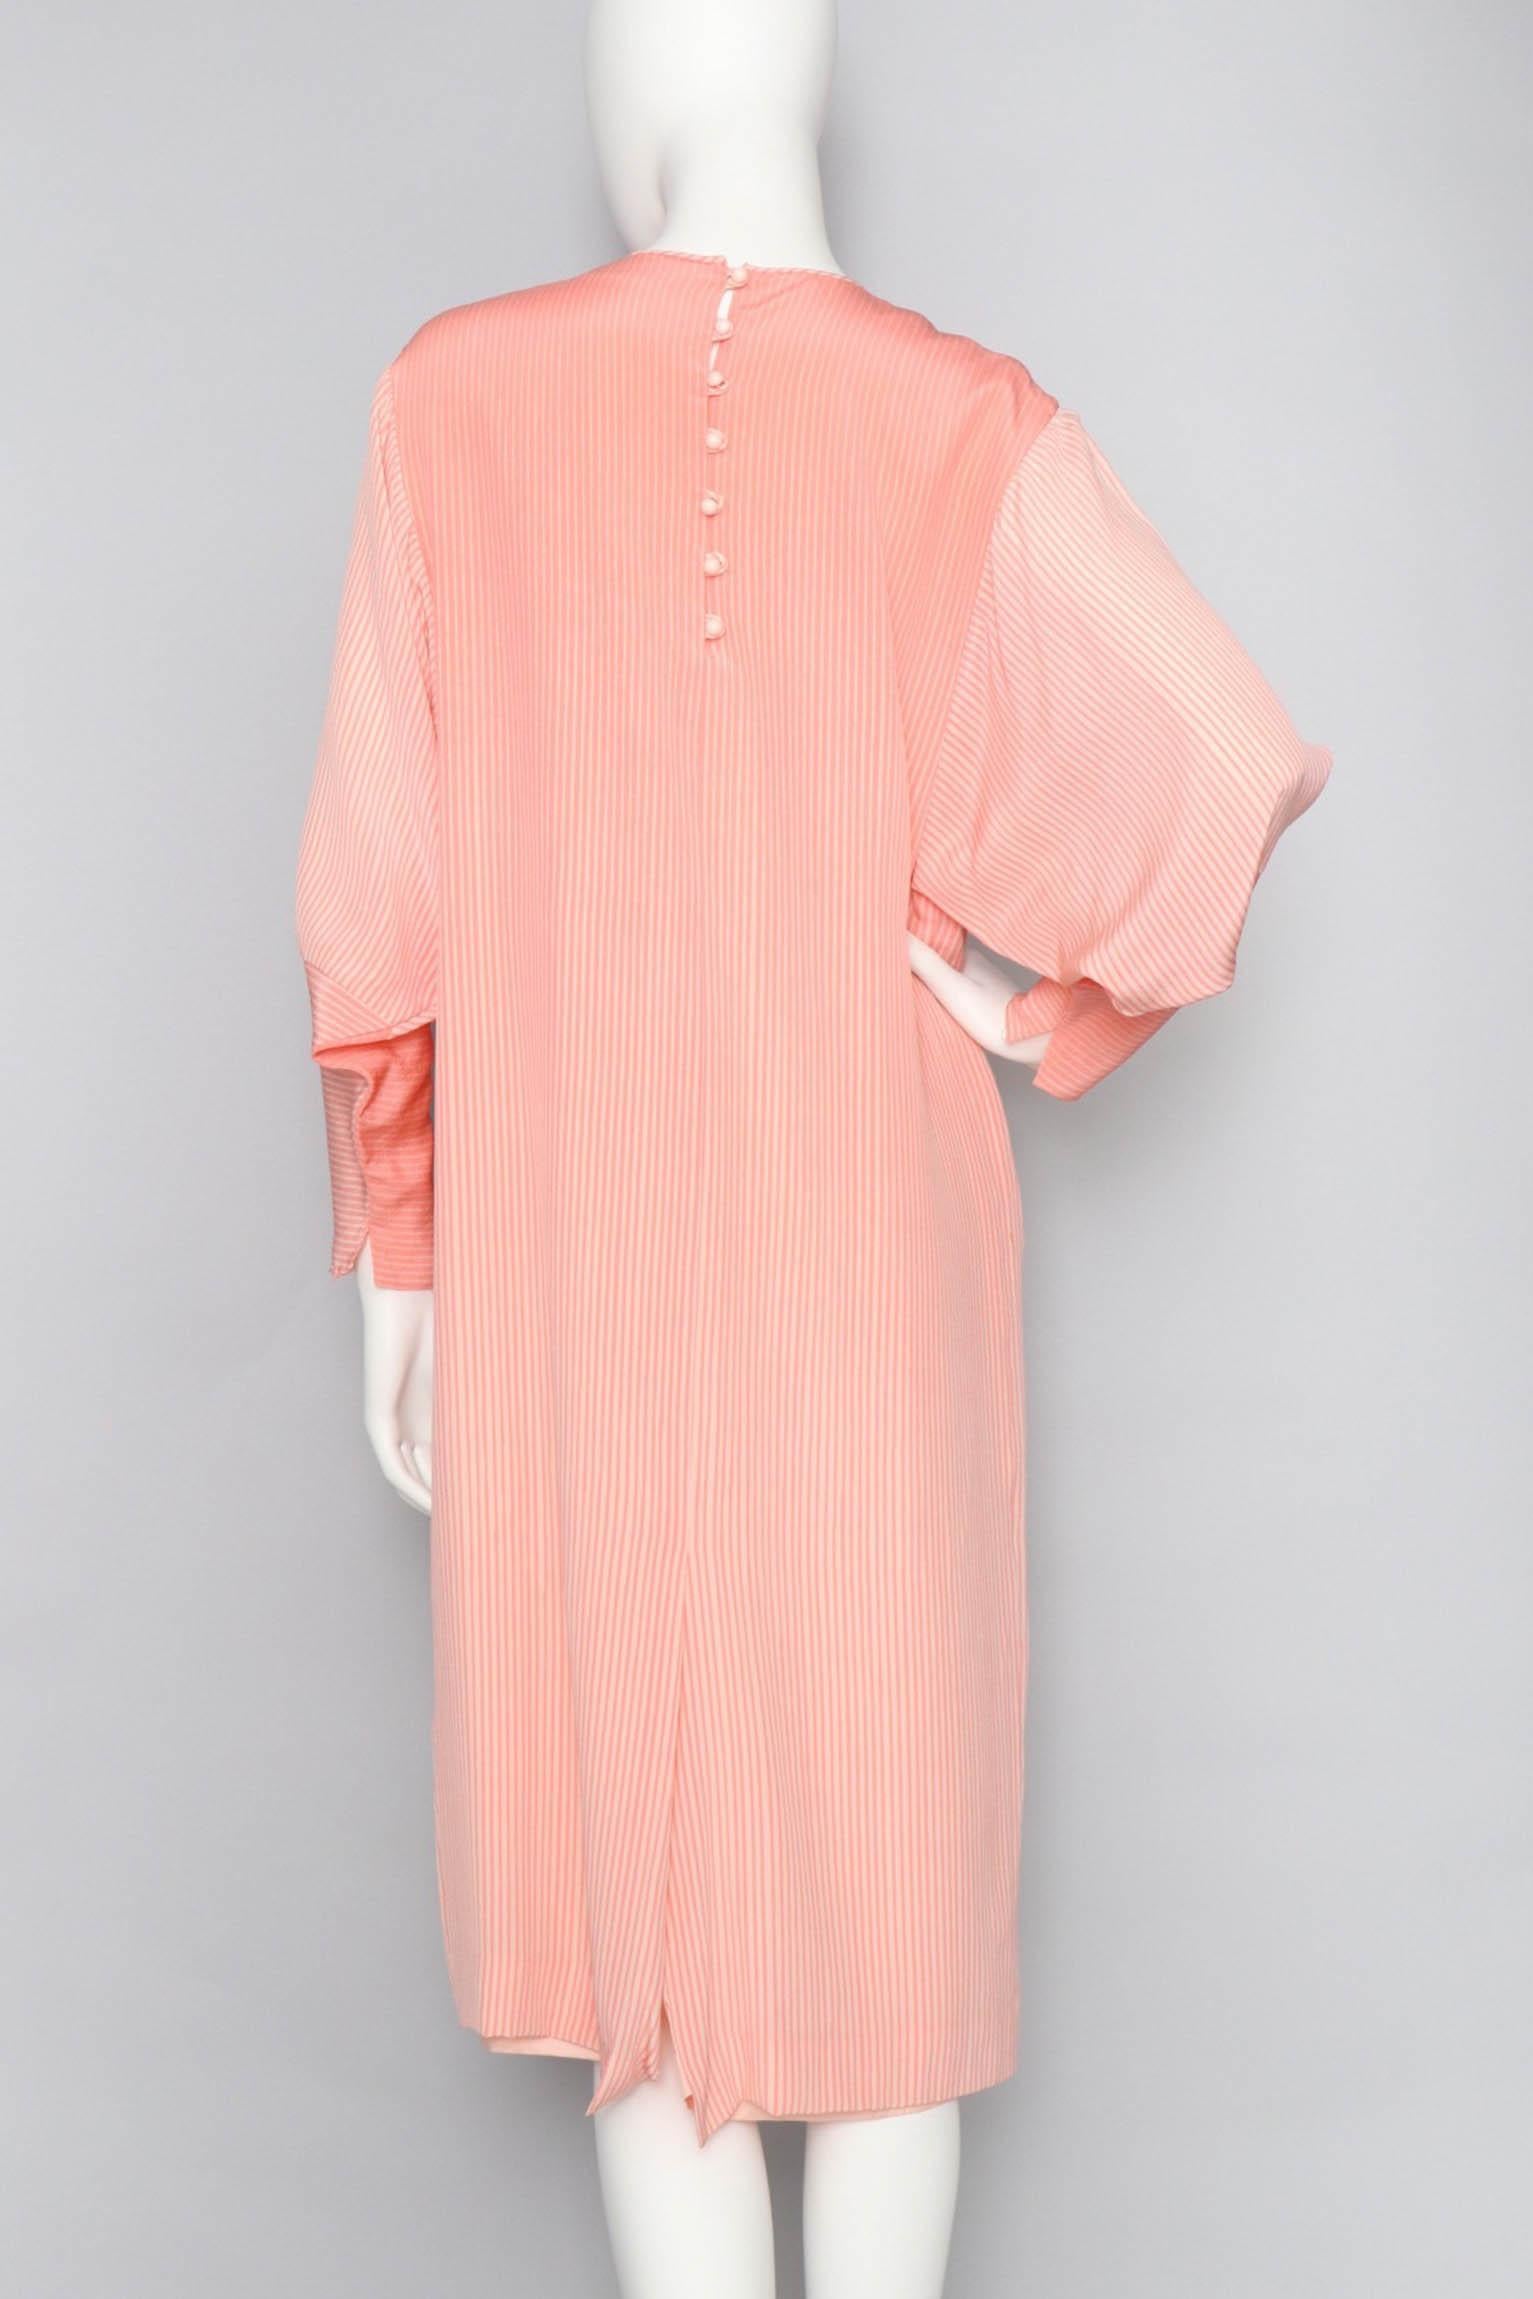 Orange Hanae Mori Pink and White Striped Silk Dress, 1980s 